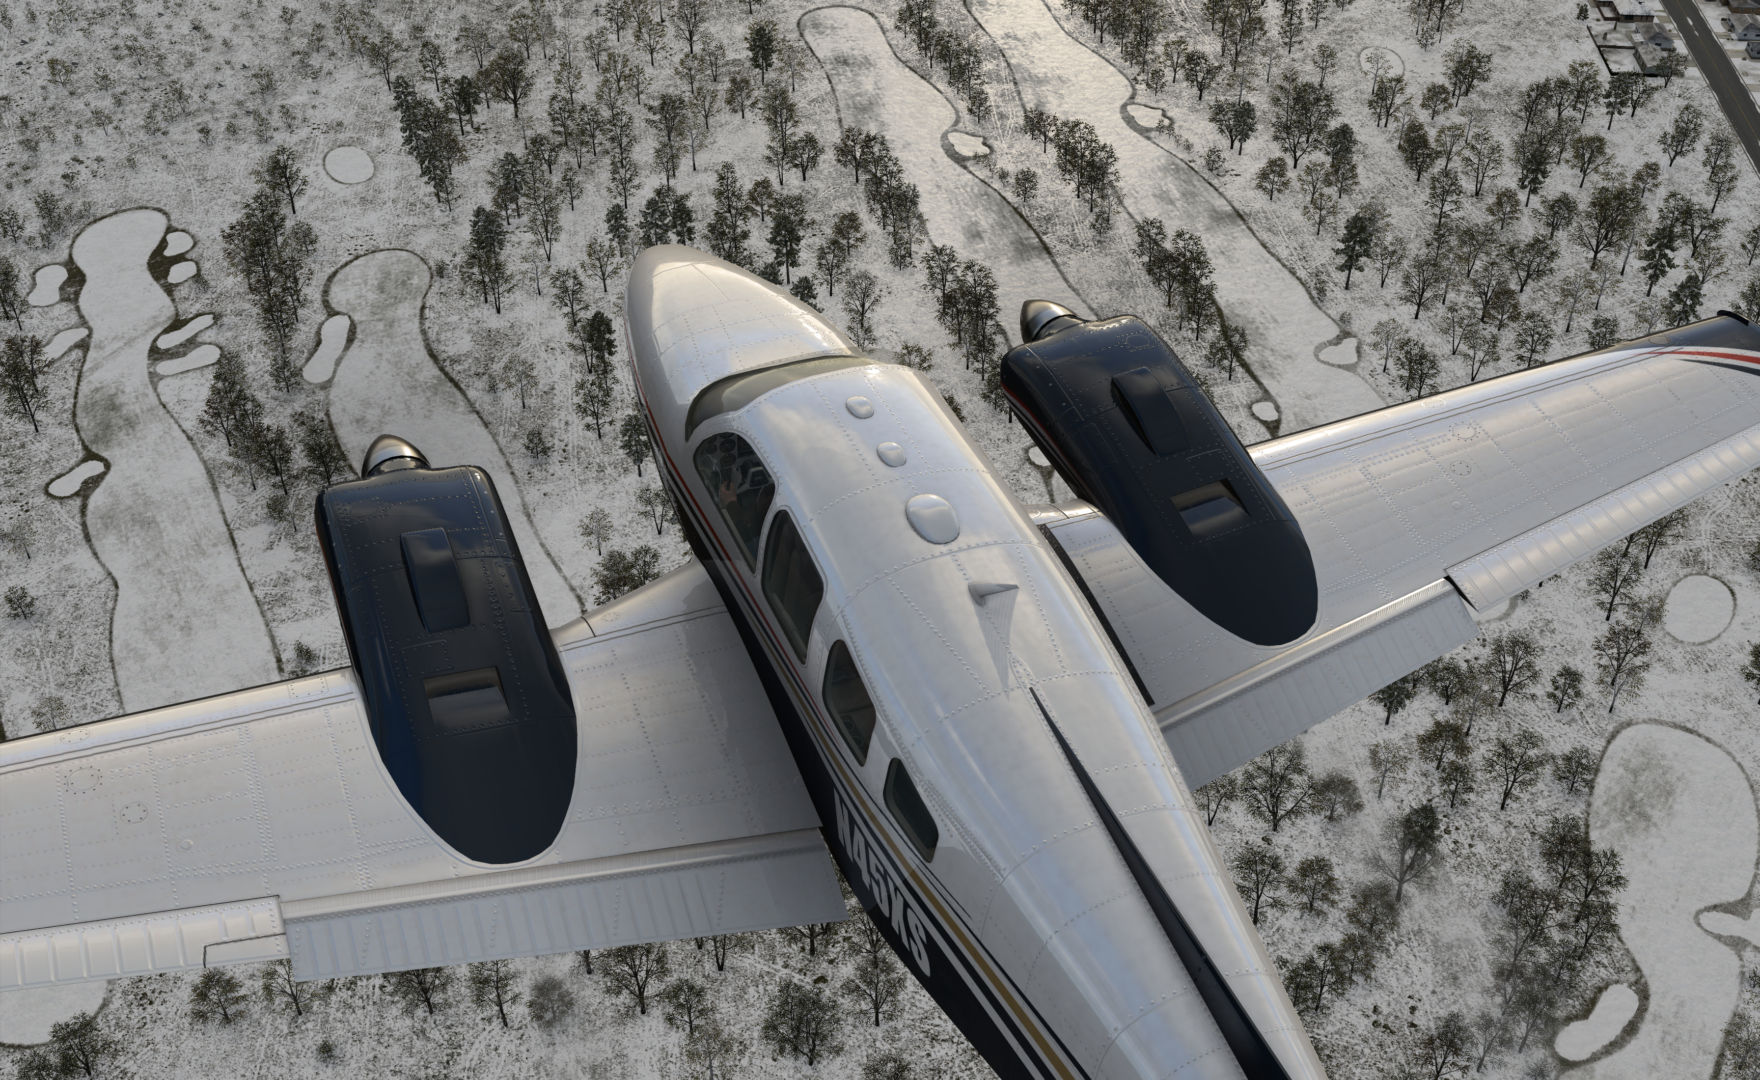 Flight Simulator - Official Announcement Trailer